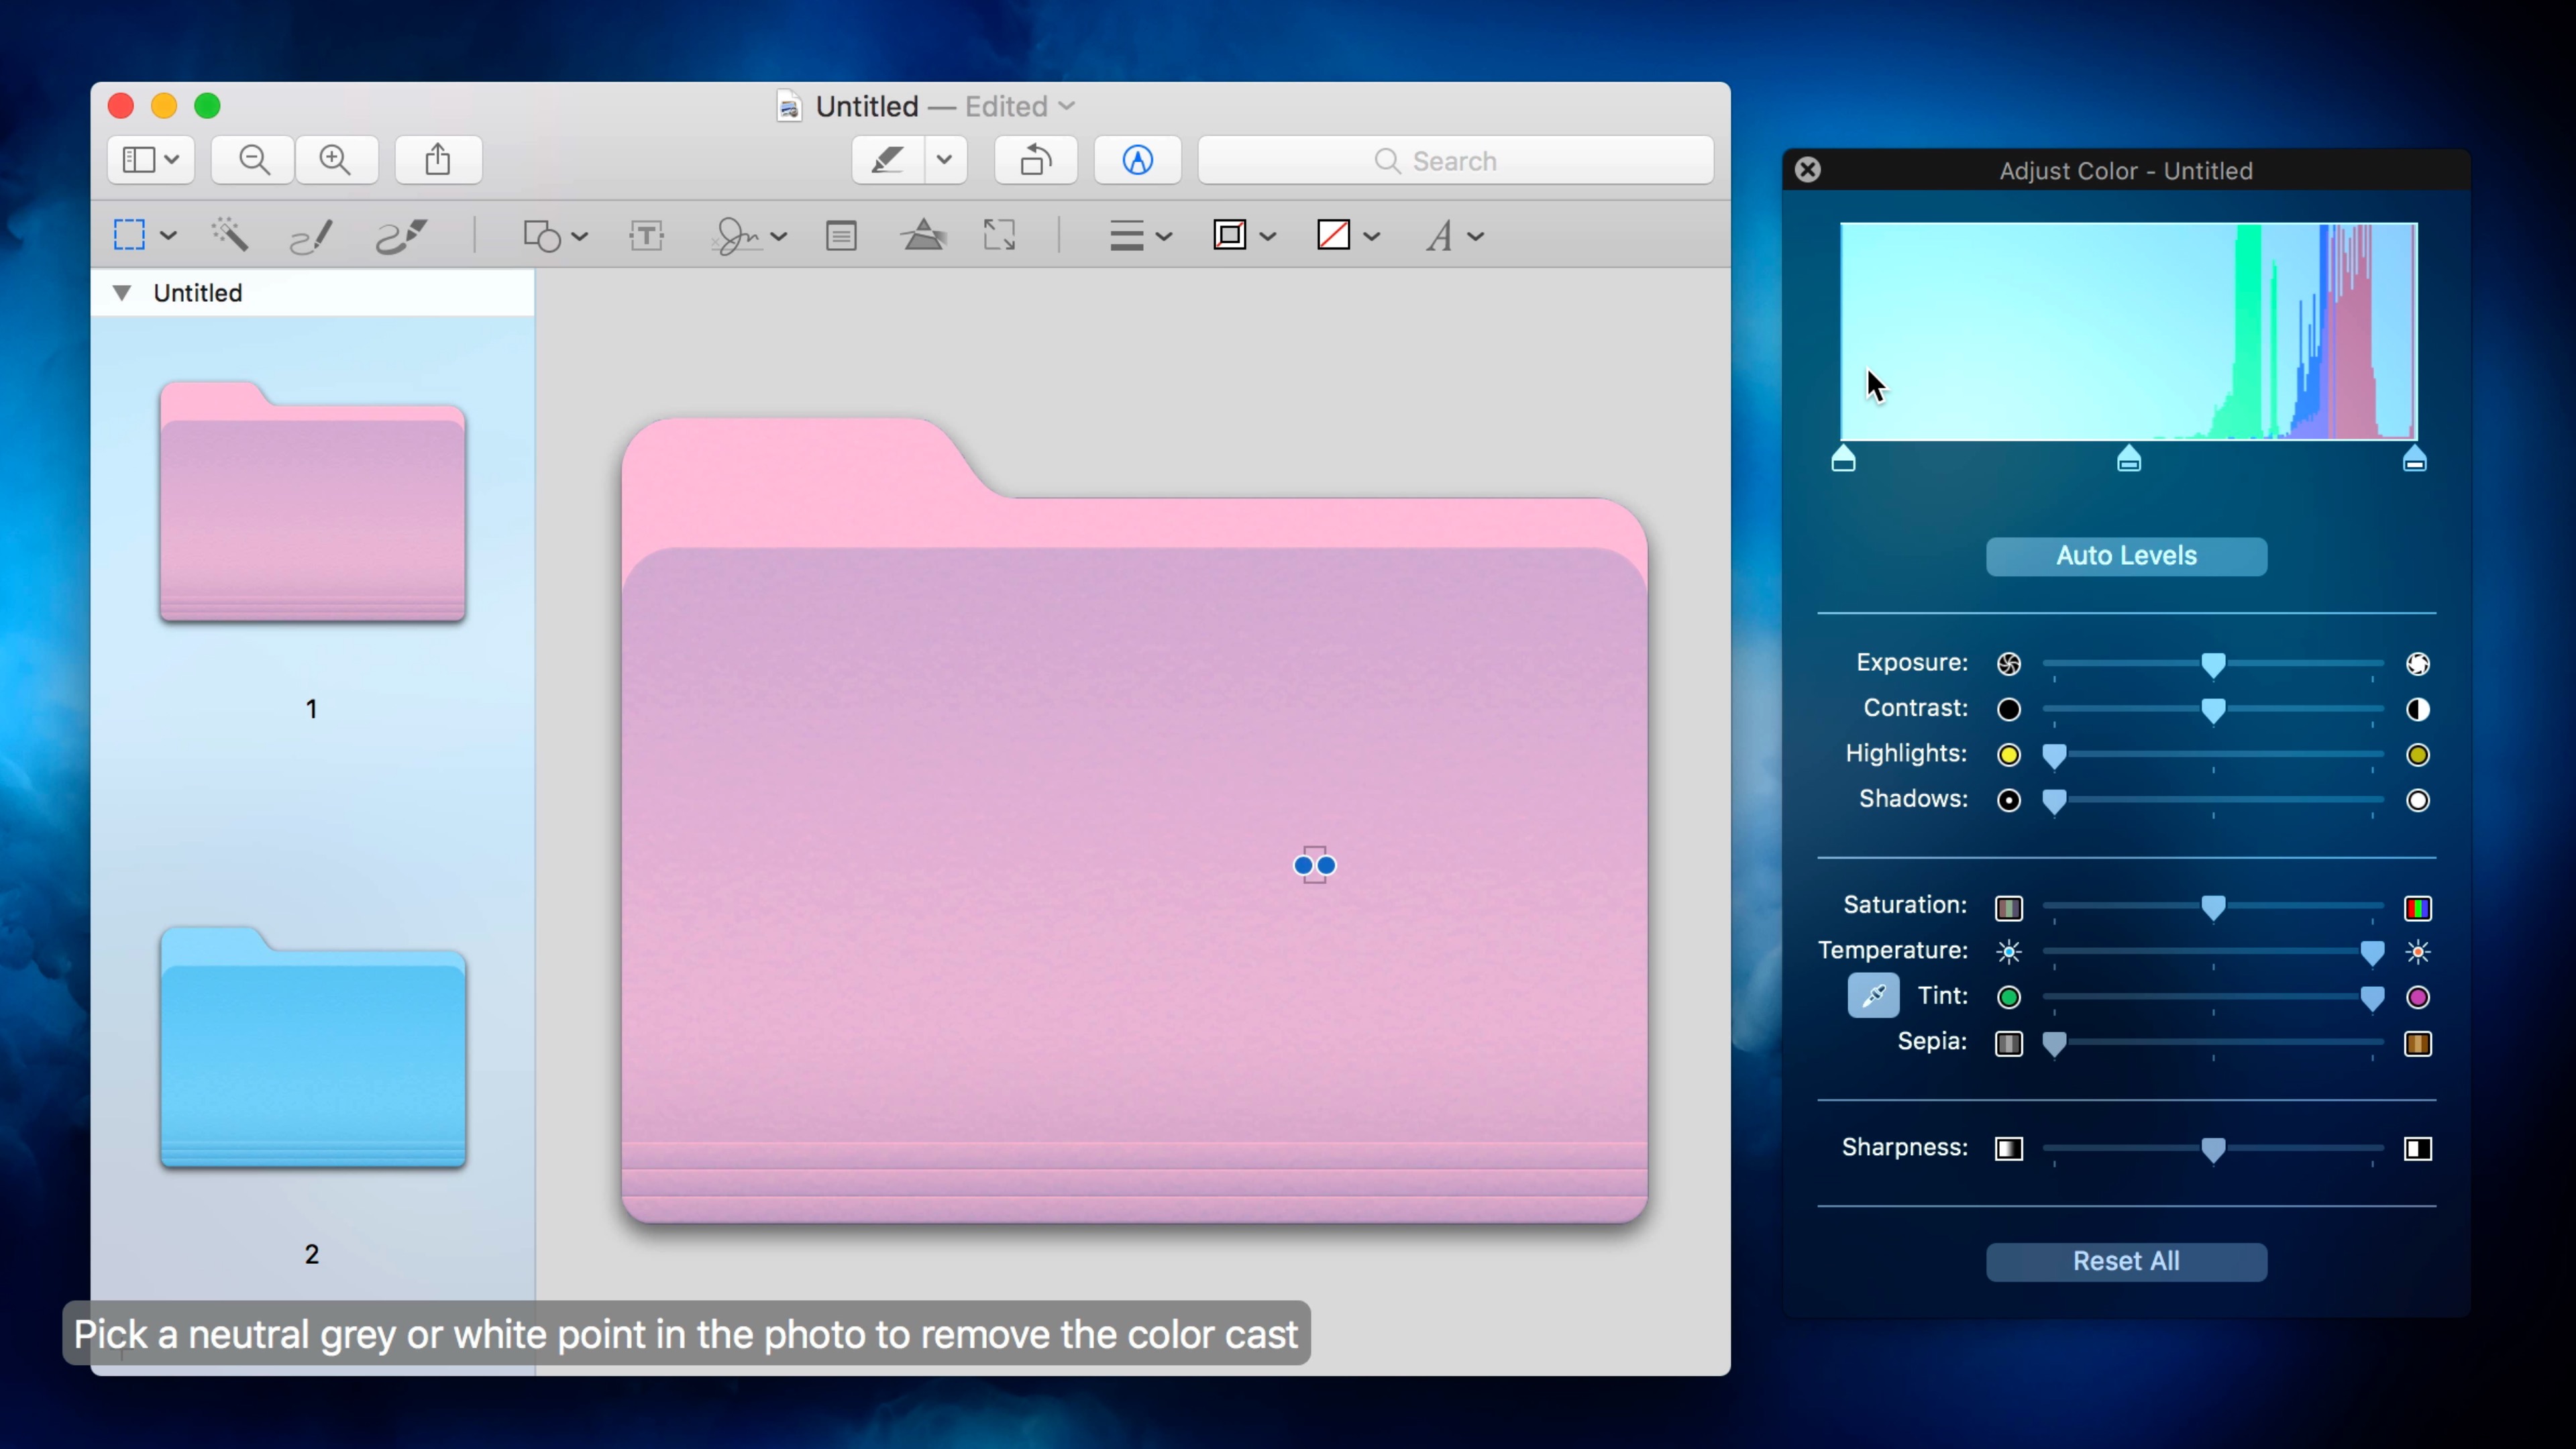 mac folder icon maker online